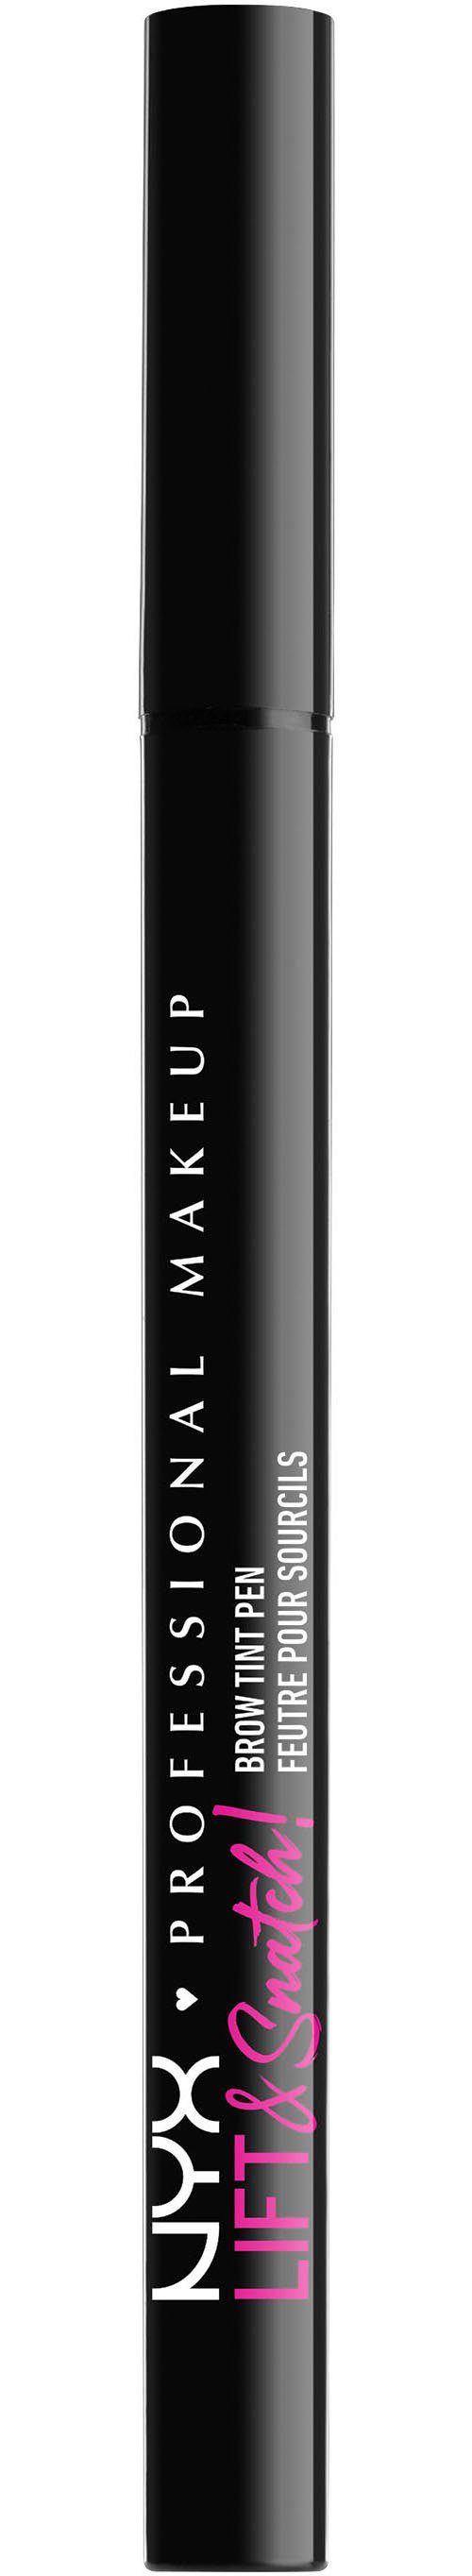 Snatch Lift Professional NYX black Pen Augenbrauen-Stift Tint Makeup & Brow